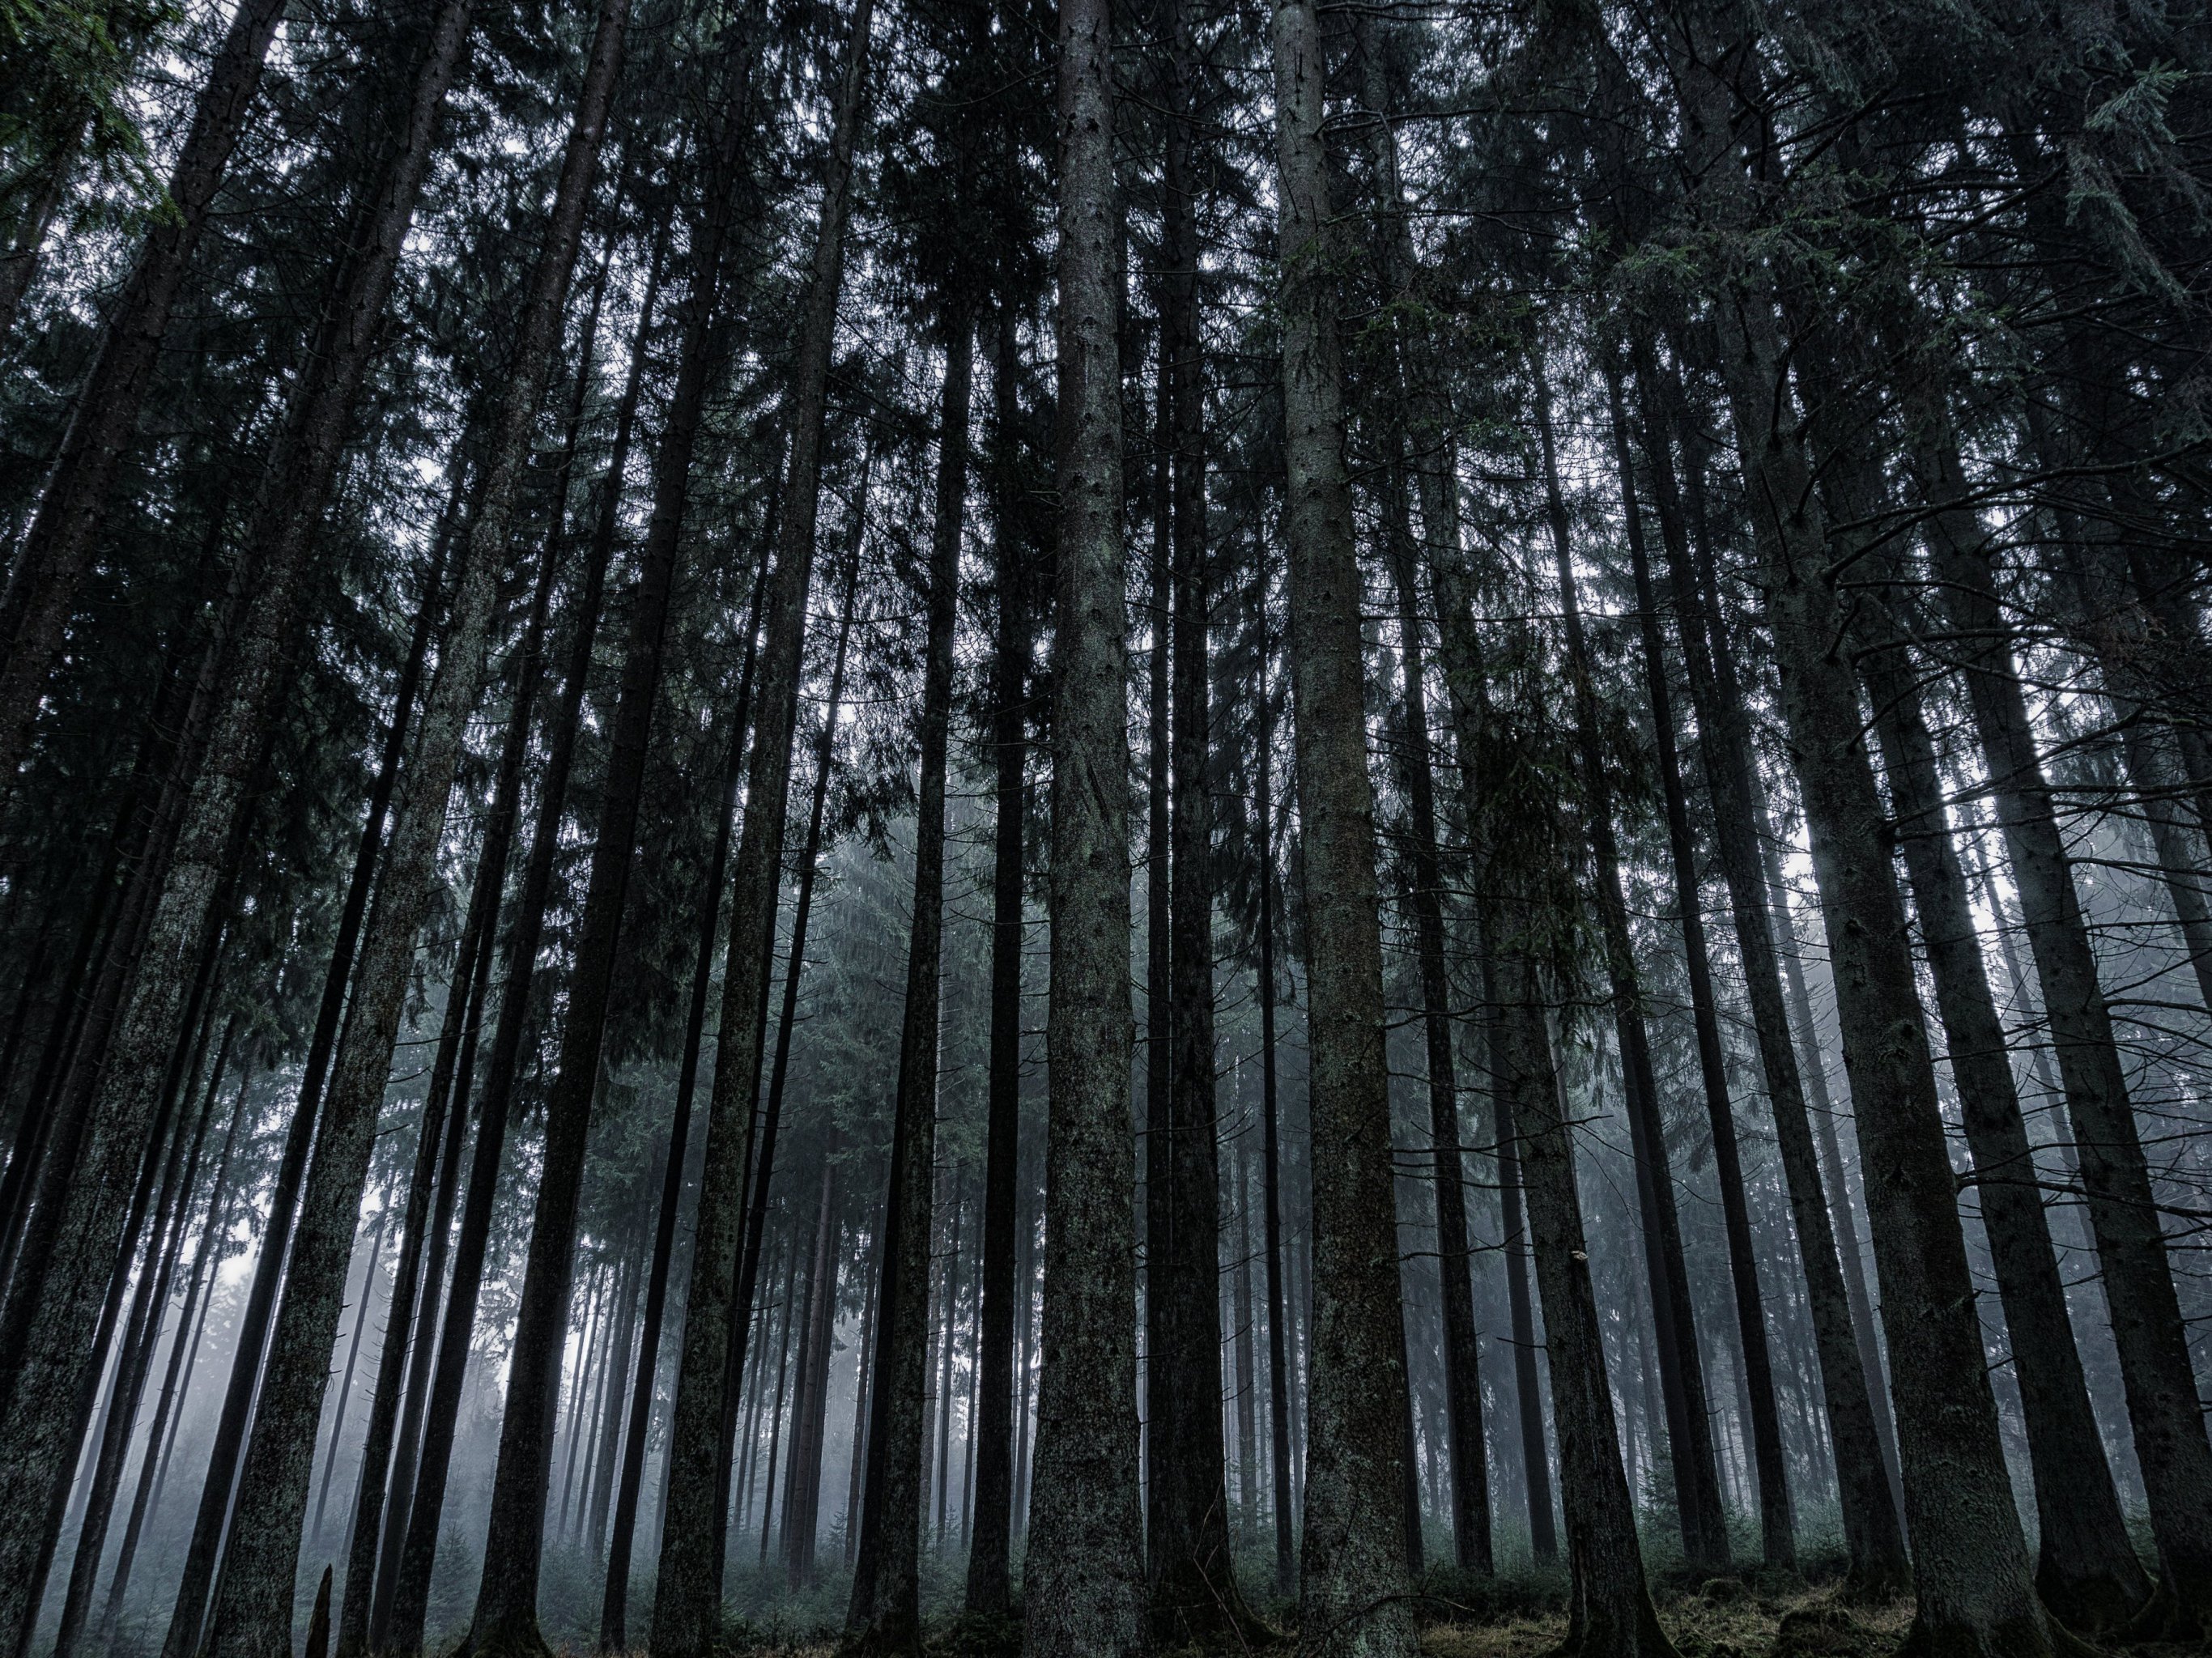 Dark Forest Wallpaper - iPhone, Android & Desktop Backgrounds